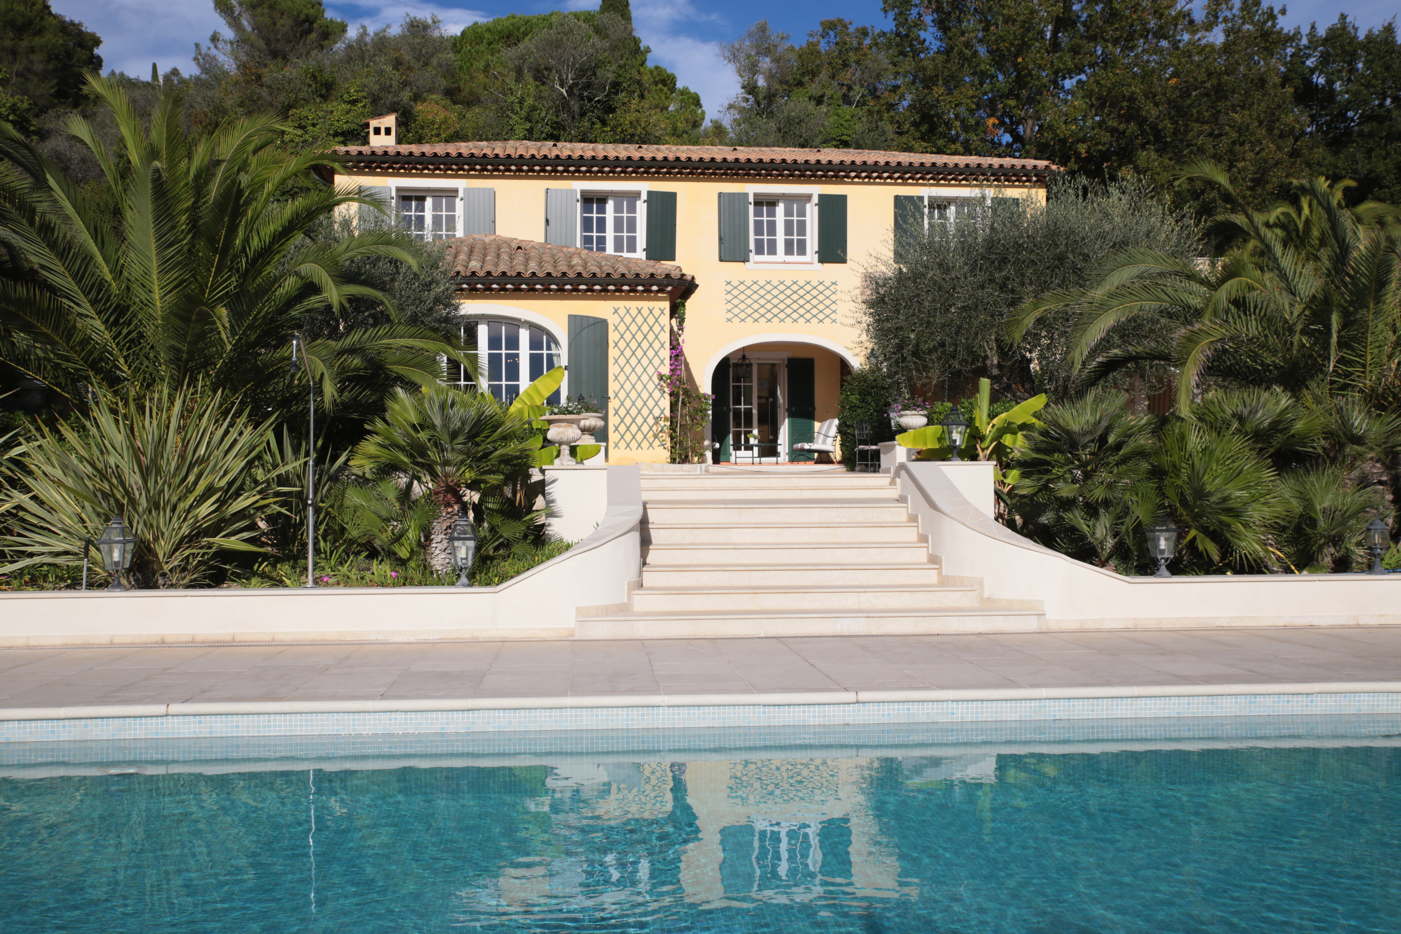 Ferienvilla mit Pool in ruhiger Lage Cote d'Azur Cannes